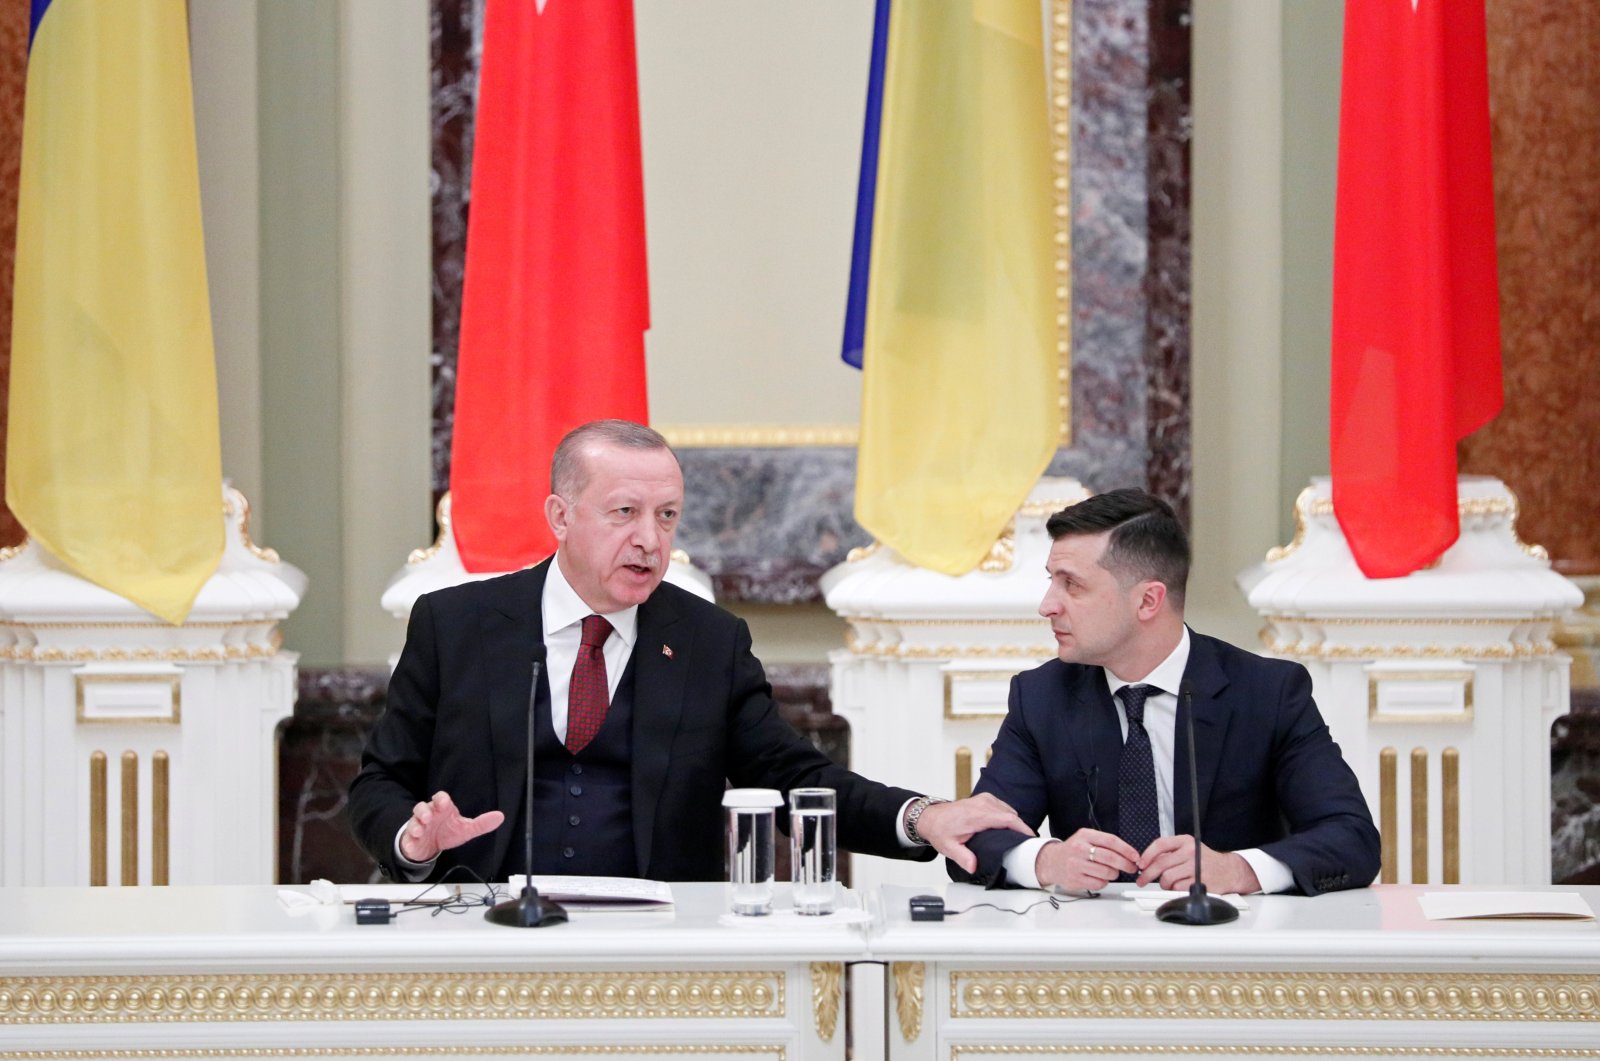 Ukrainian President Volodymyr Zelenskyy and President Recep Tayyip Erdoğan attend a joint news conference following their meeting in Kyiv, Ukraine, Feb. 3, 2020. (Reuters Photo)